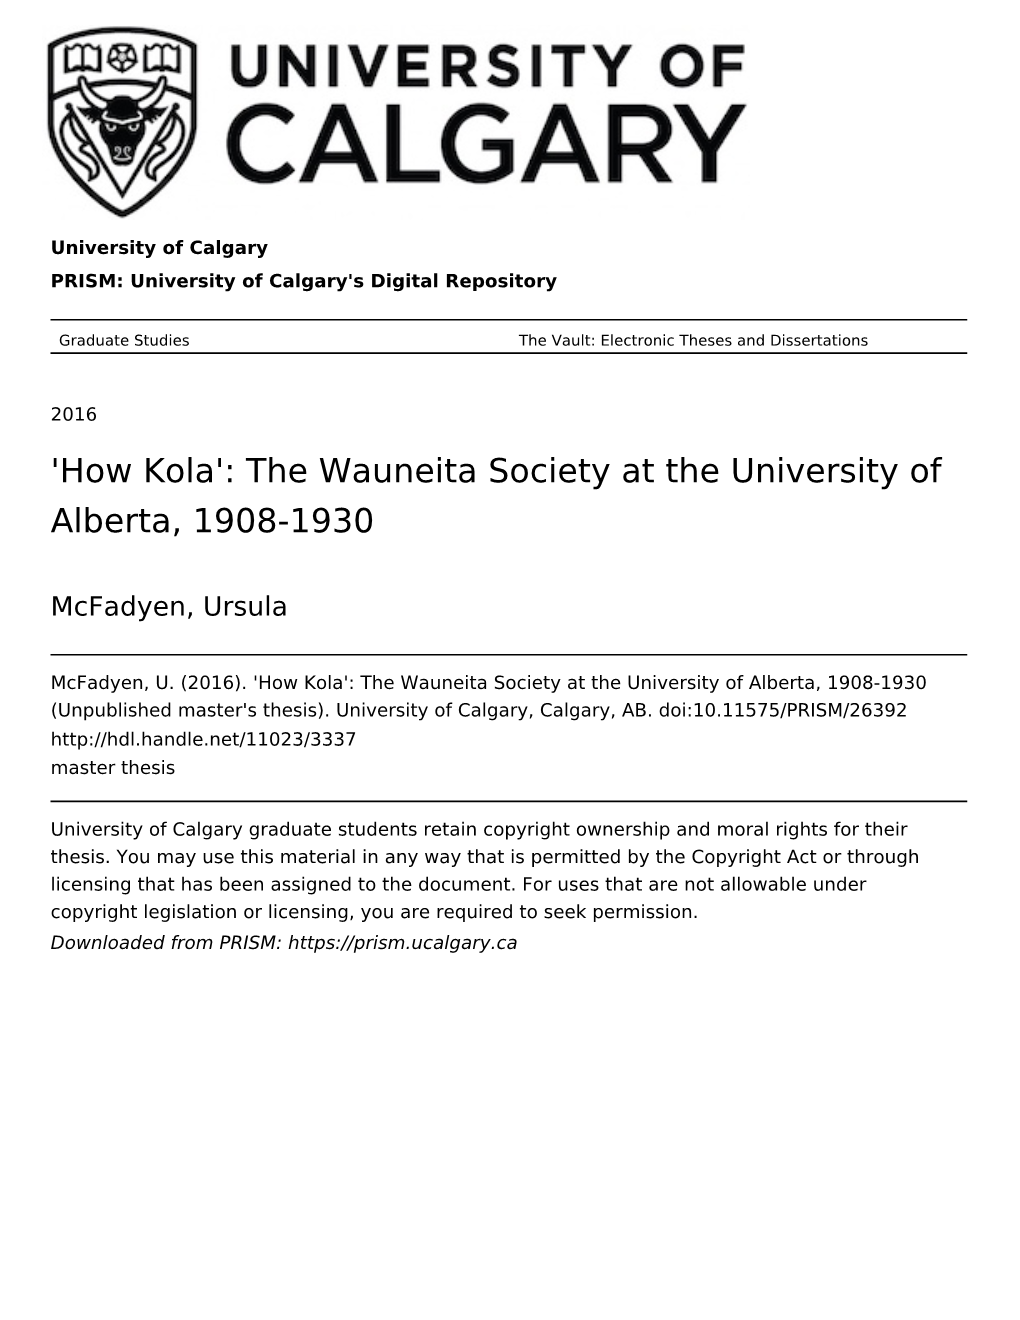 'How Kola': the Wauneita Society at the University of Alberta, 1908-1930